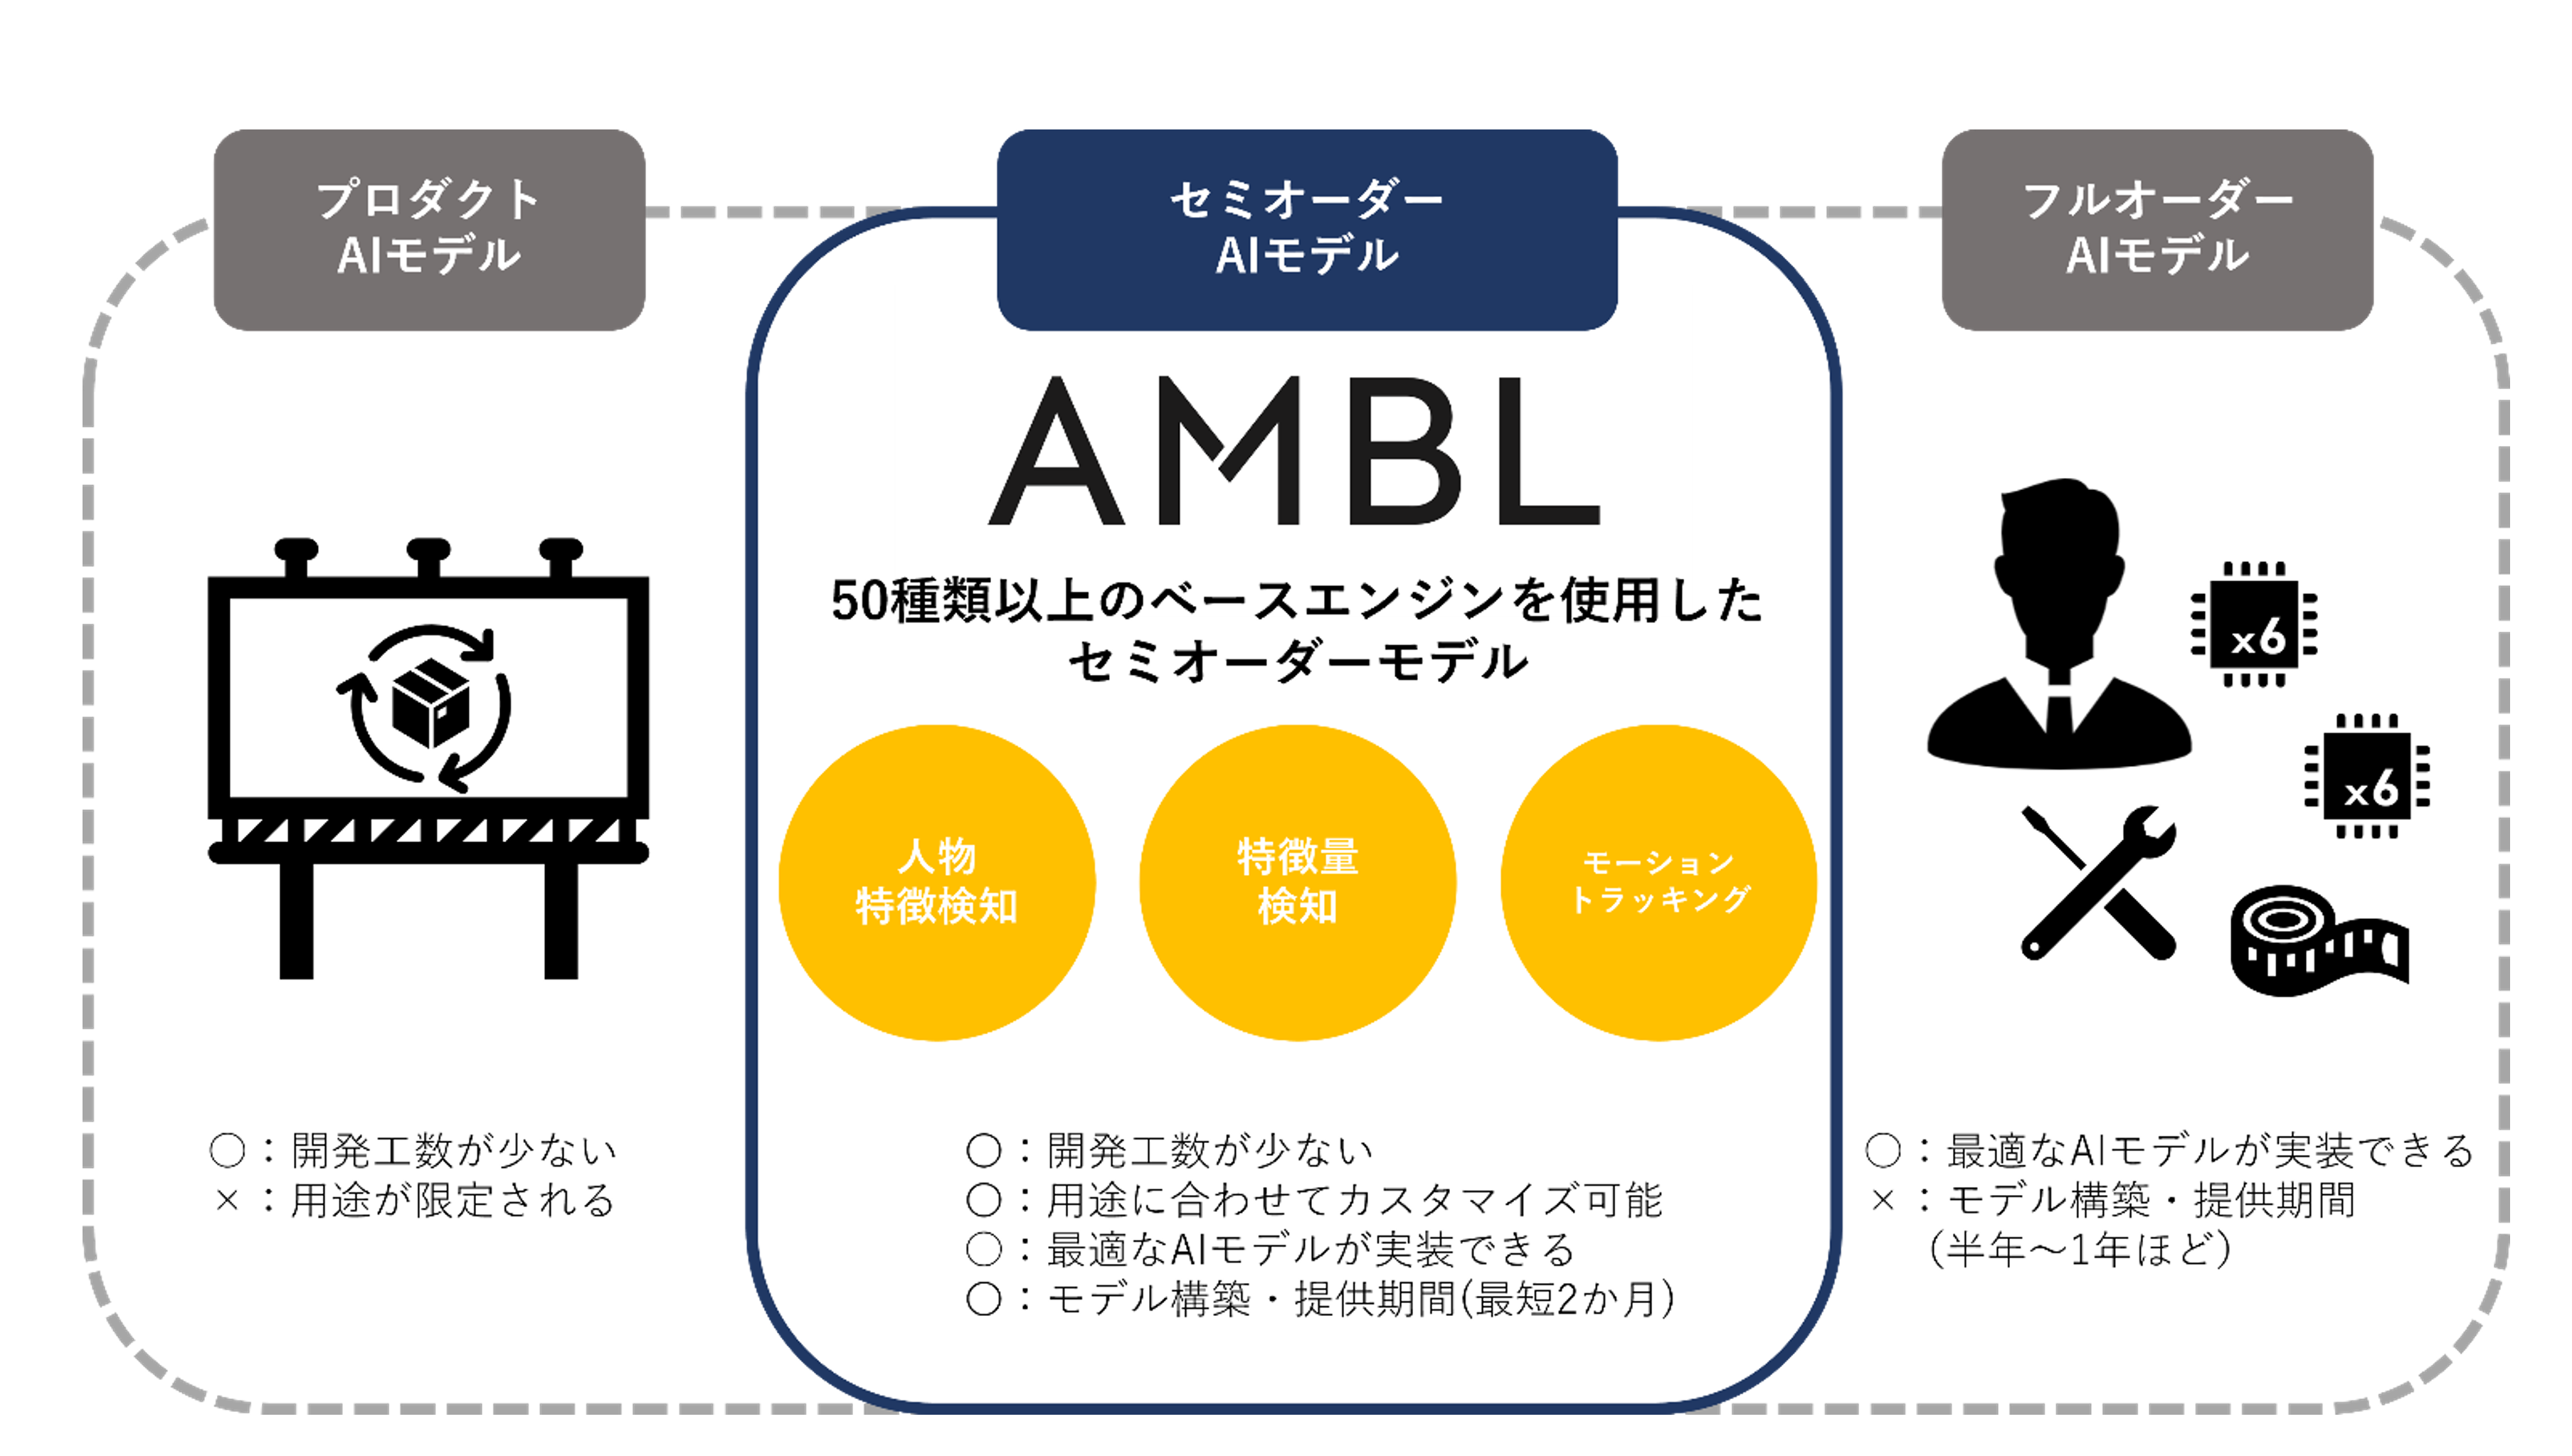 AMBLが有するAIモデルは、50種類以上のベースエンジンを使用したセミオーダーモデル